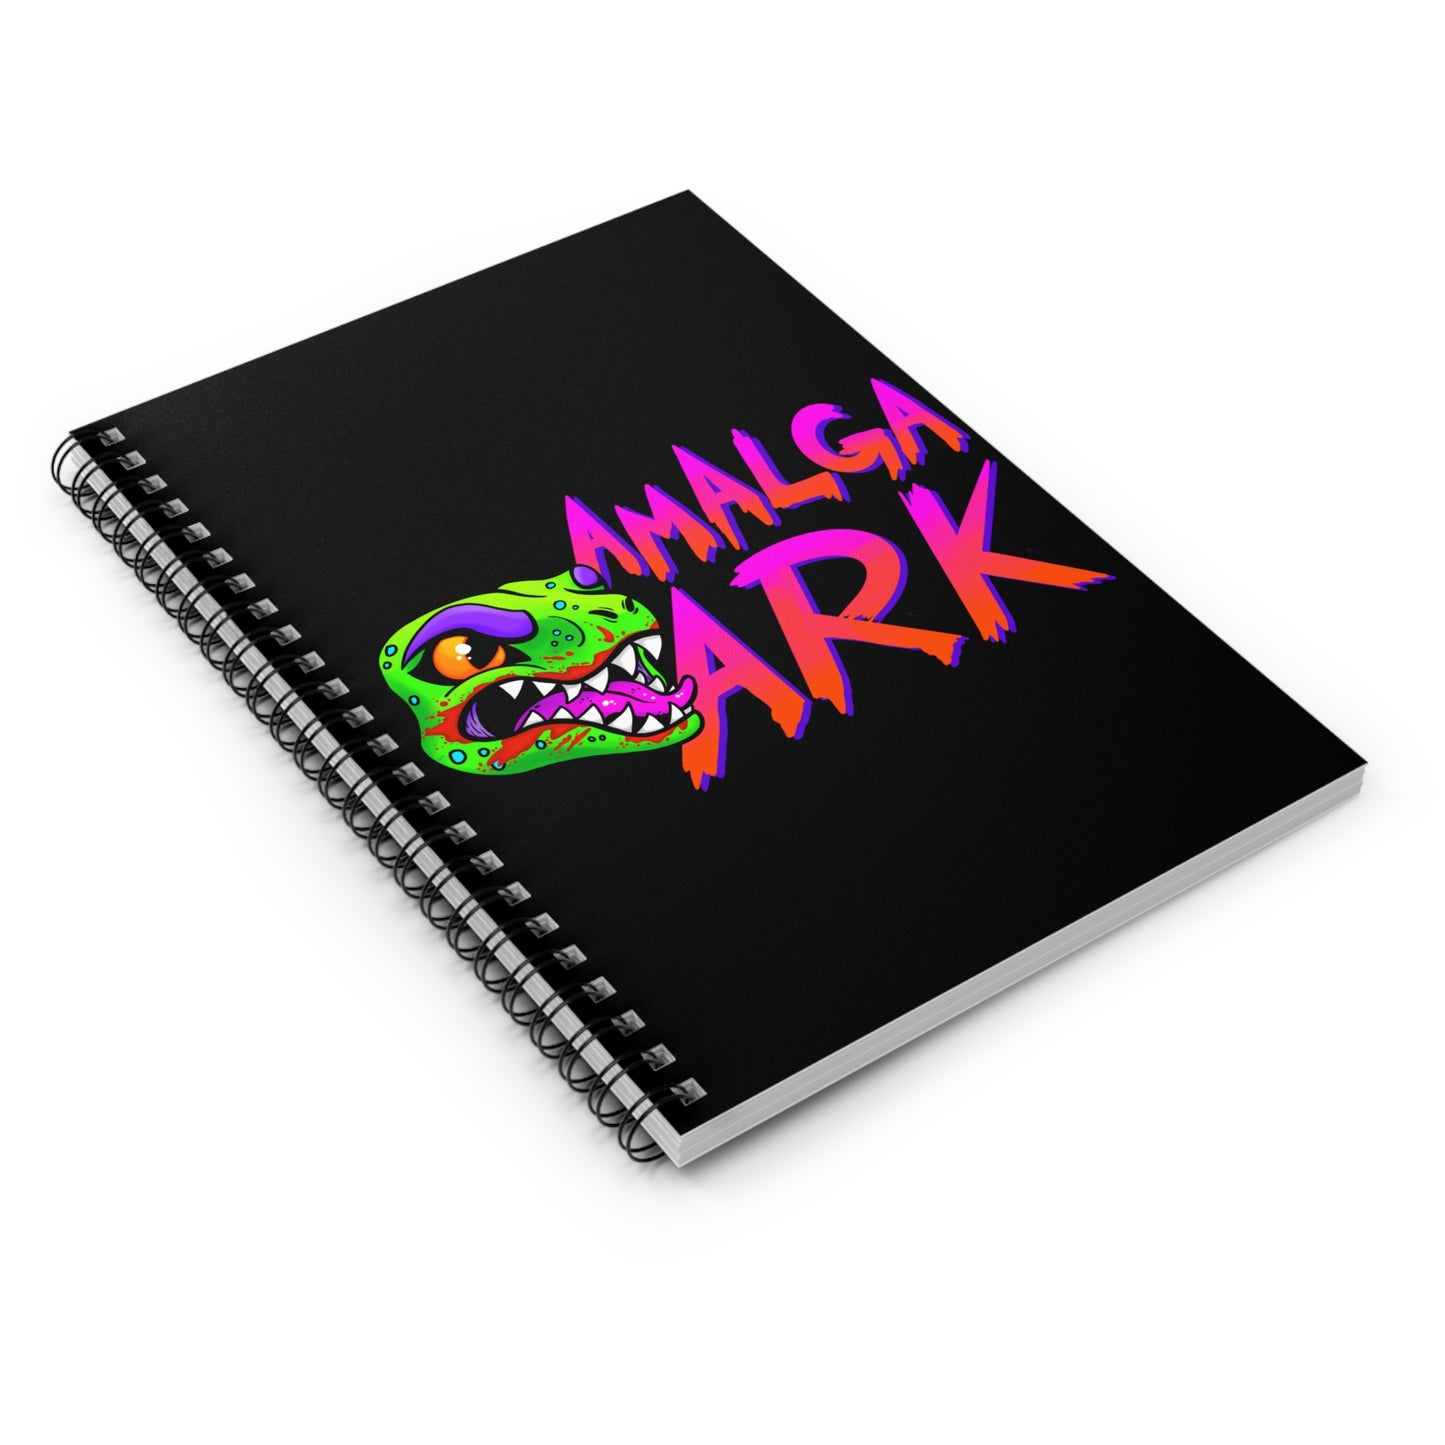 "Amalga Ark" - Spiral Journal (Lined)